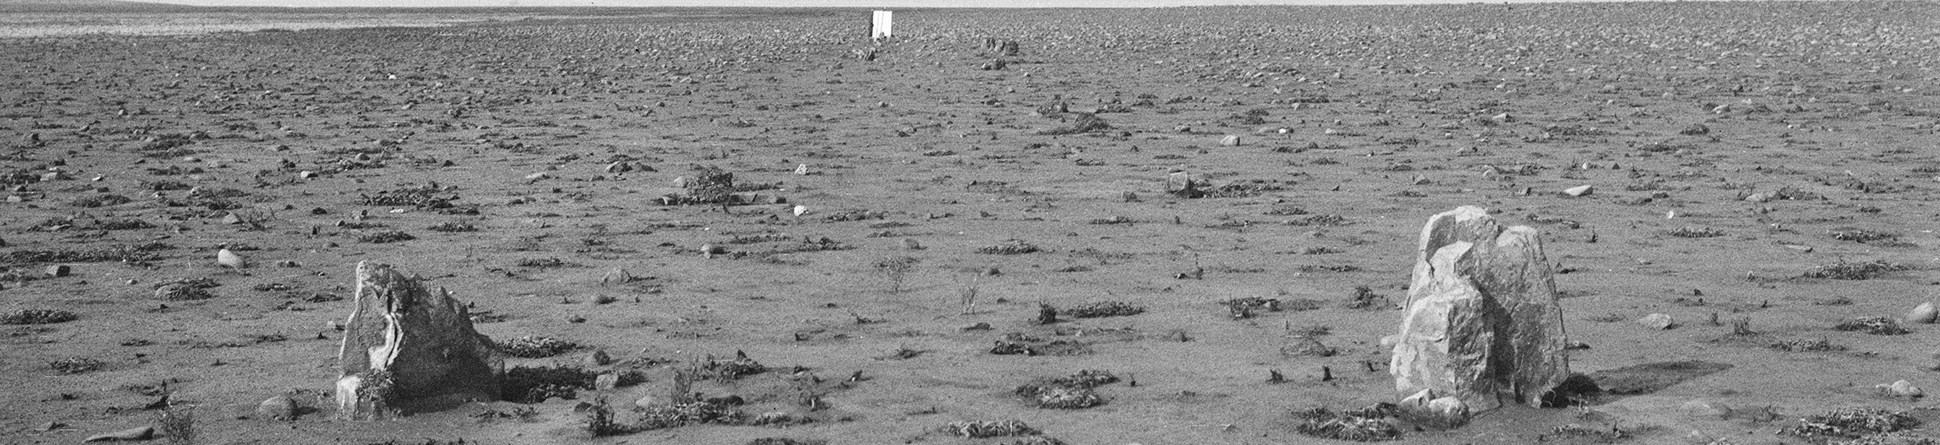 Image of the Yelland stone row on Isley Marsh in 1953.